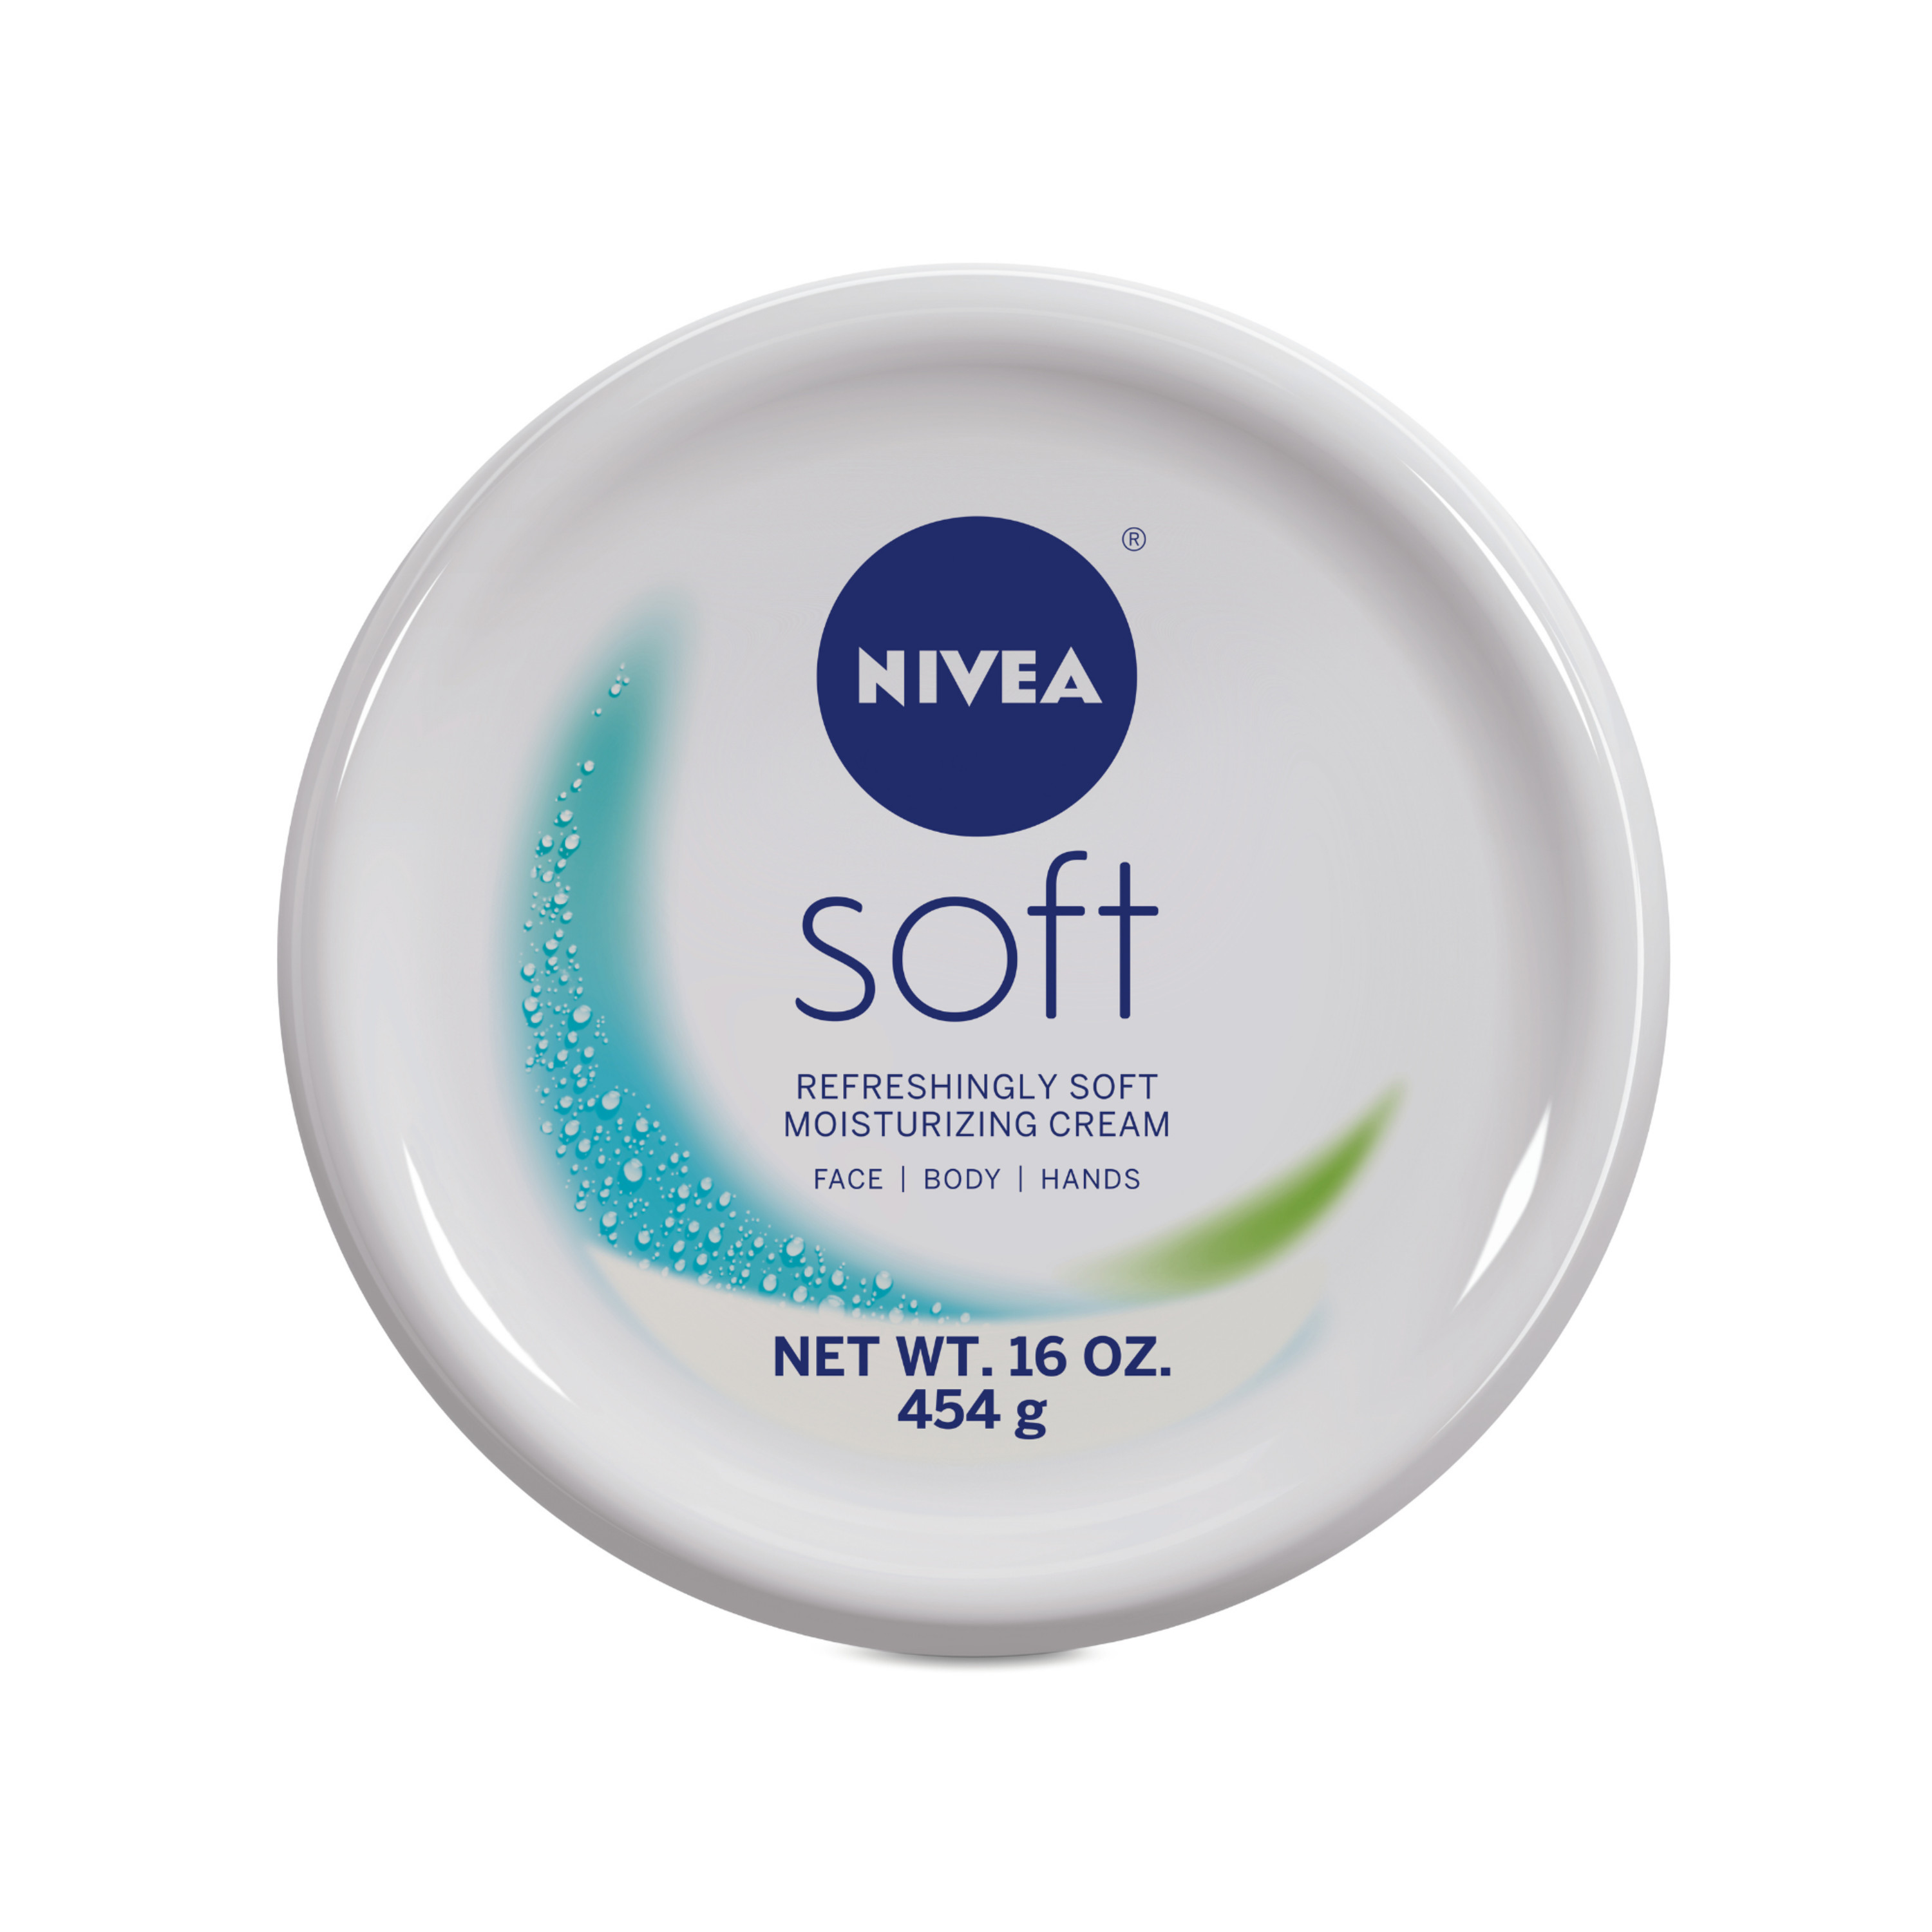 NIVEA Soft Cream, Refreshingly Soft Moisturizing Cream, Body Cream, Hand Cream, Face Cream, 16 Oz Jar - image 2 of 9